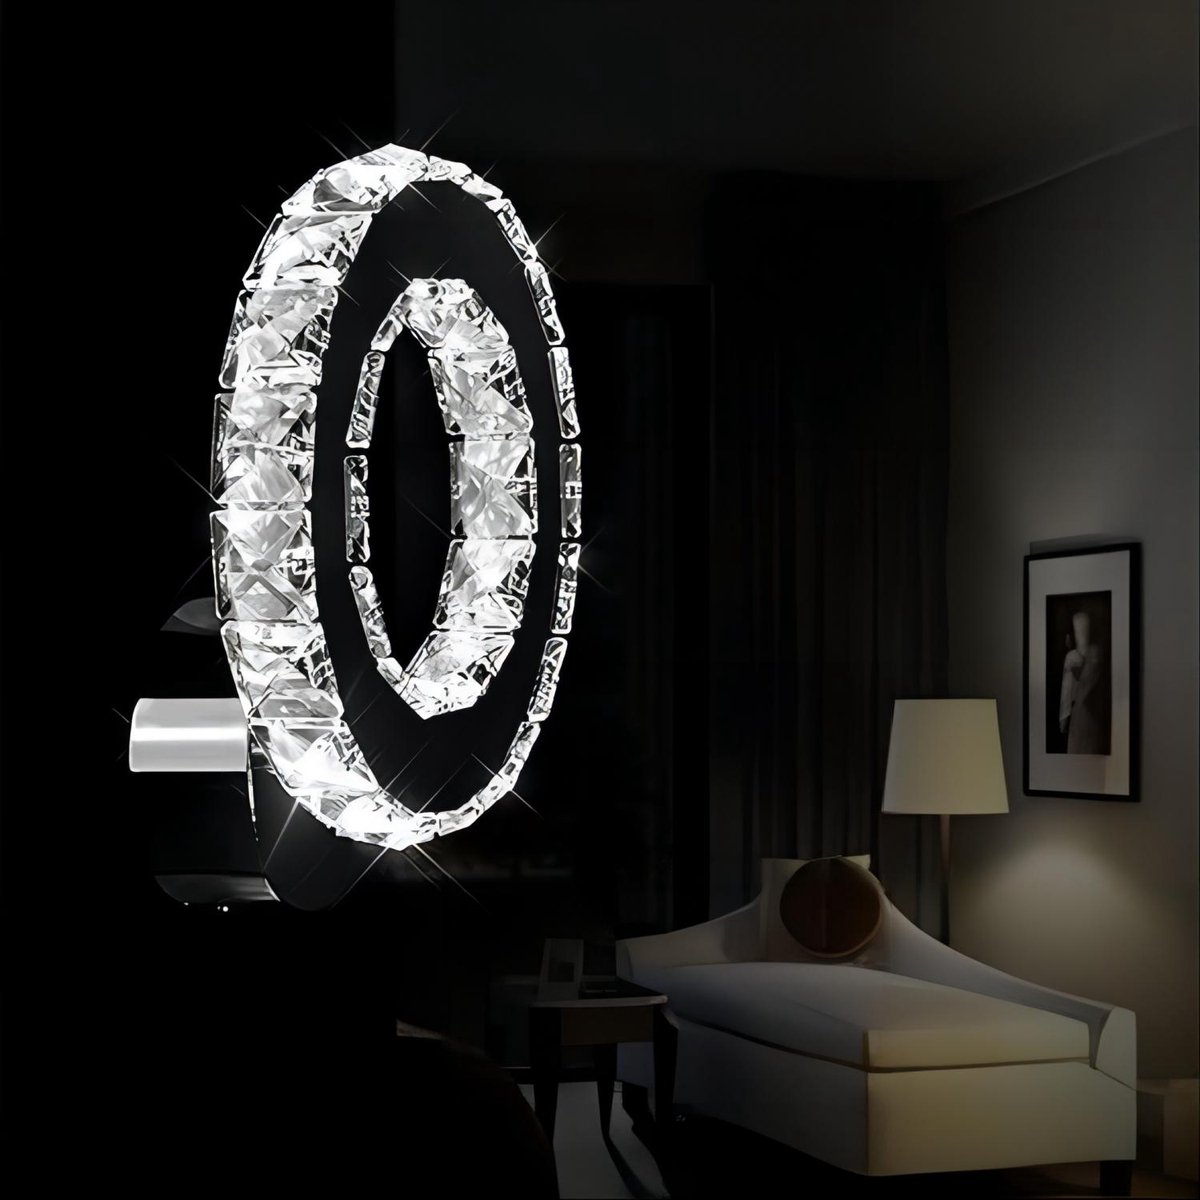 Goeco Wandlamp - 20cm - 16W - LED - K9 - Kristallen Wandlamp - 6500K - Koel Wit Licht